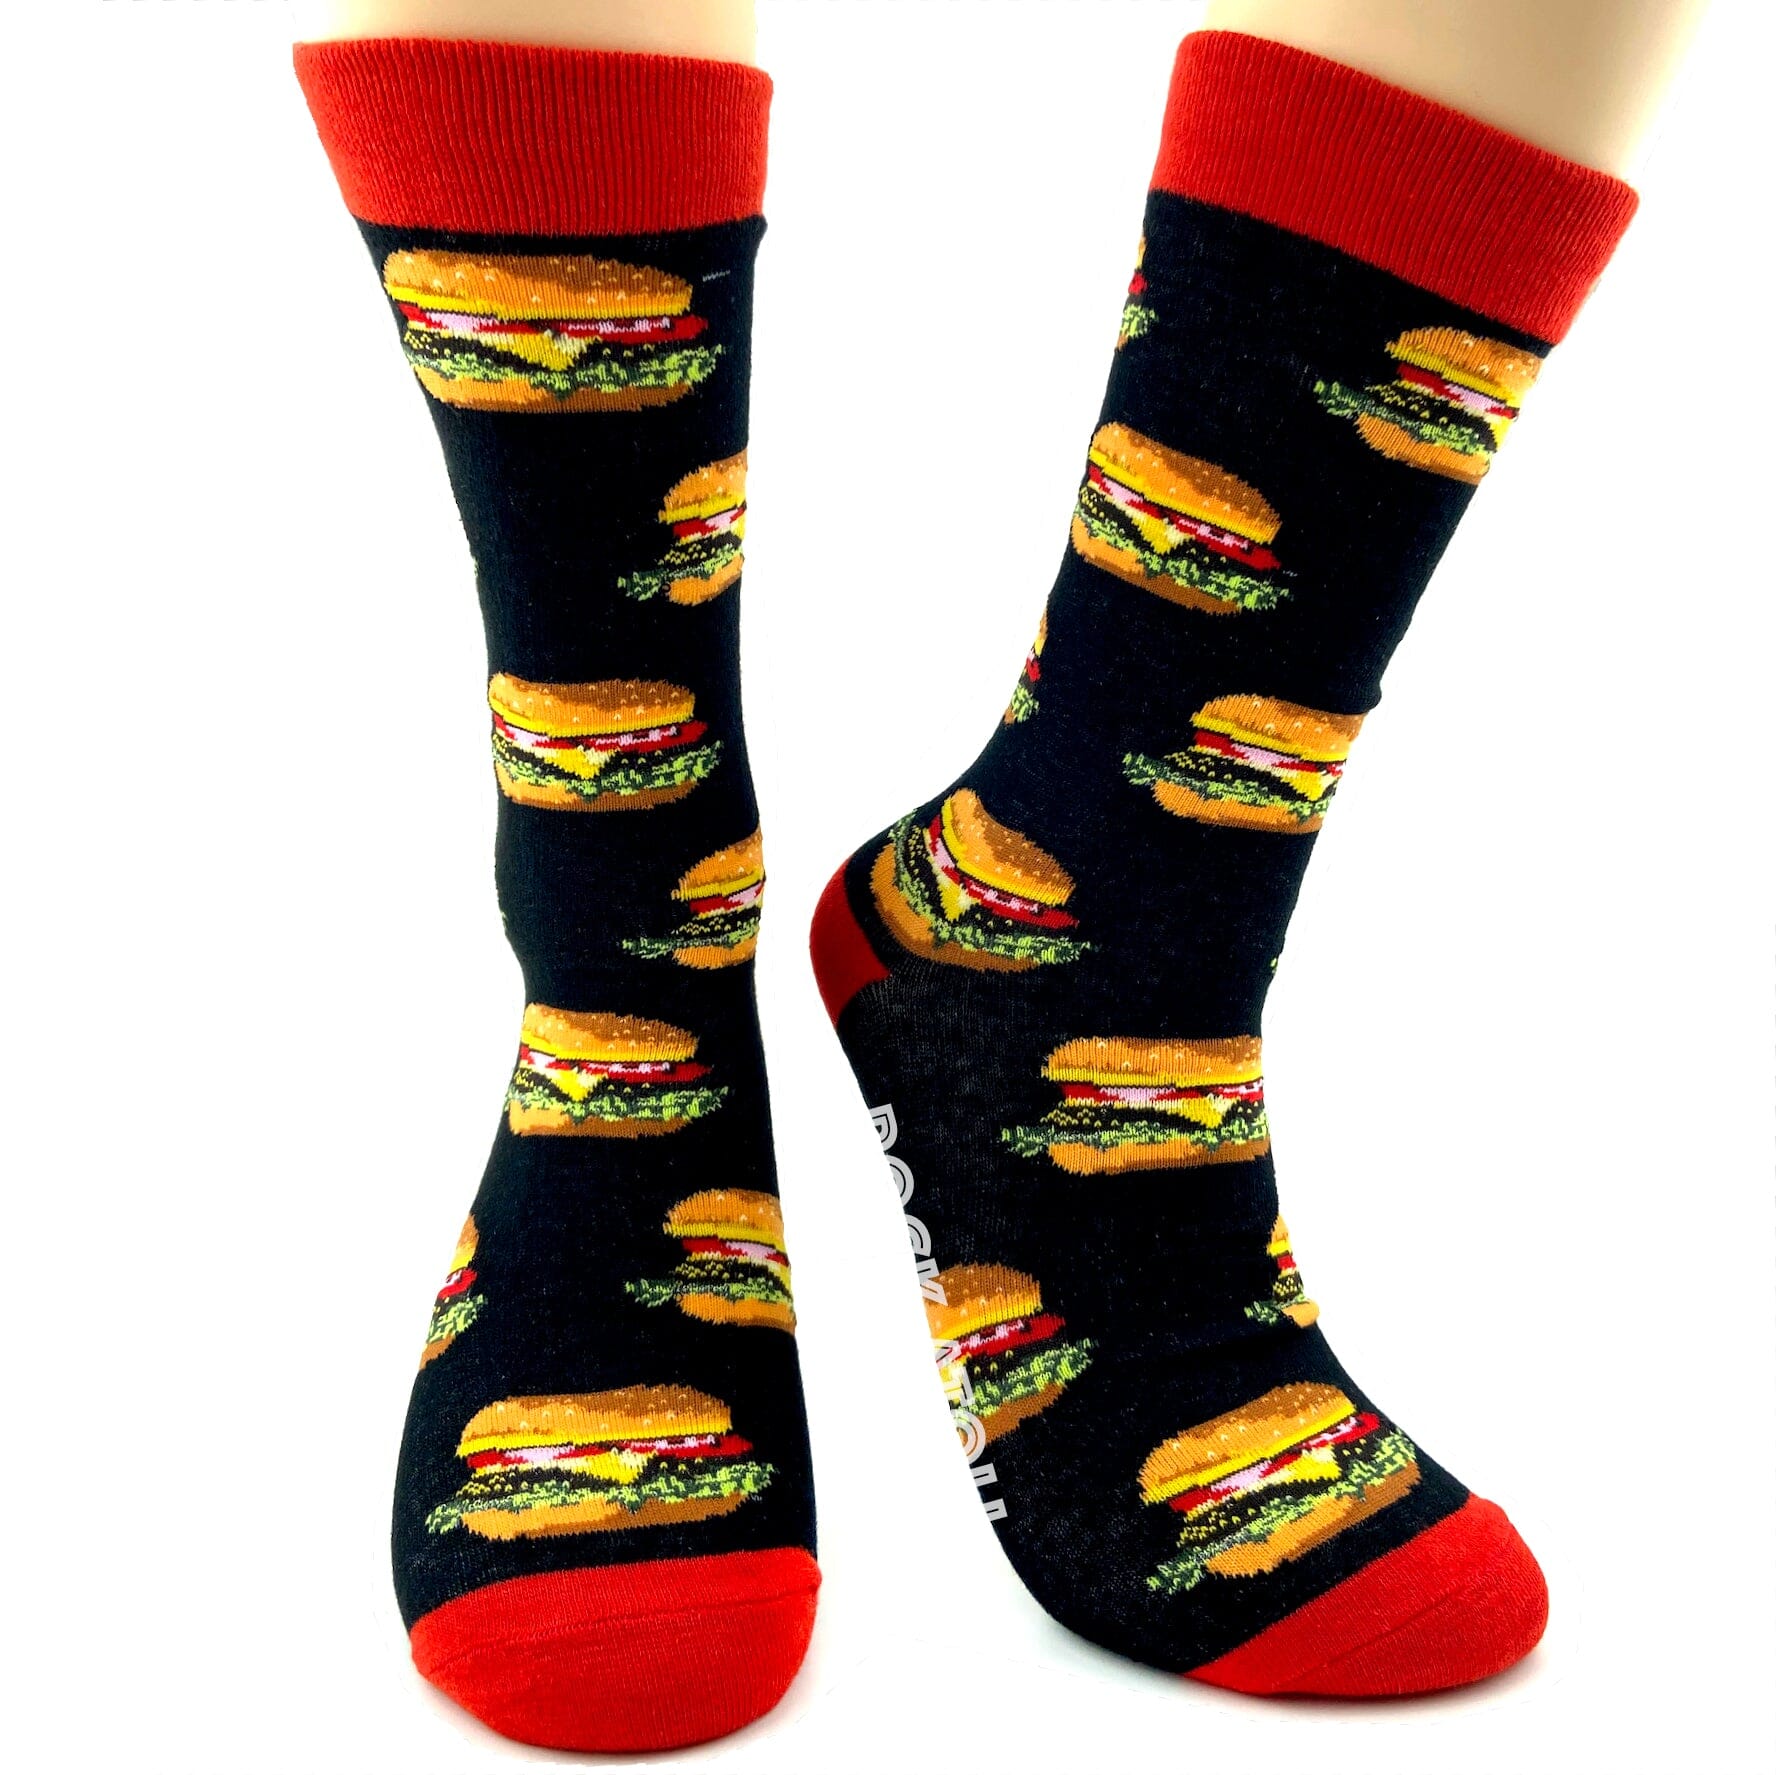 Black Unisex Cheeseburgers Print Fast Food Foodie Themed Novelty Socks